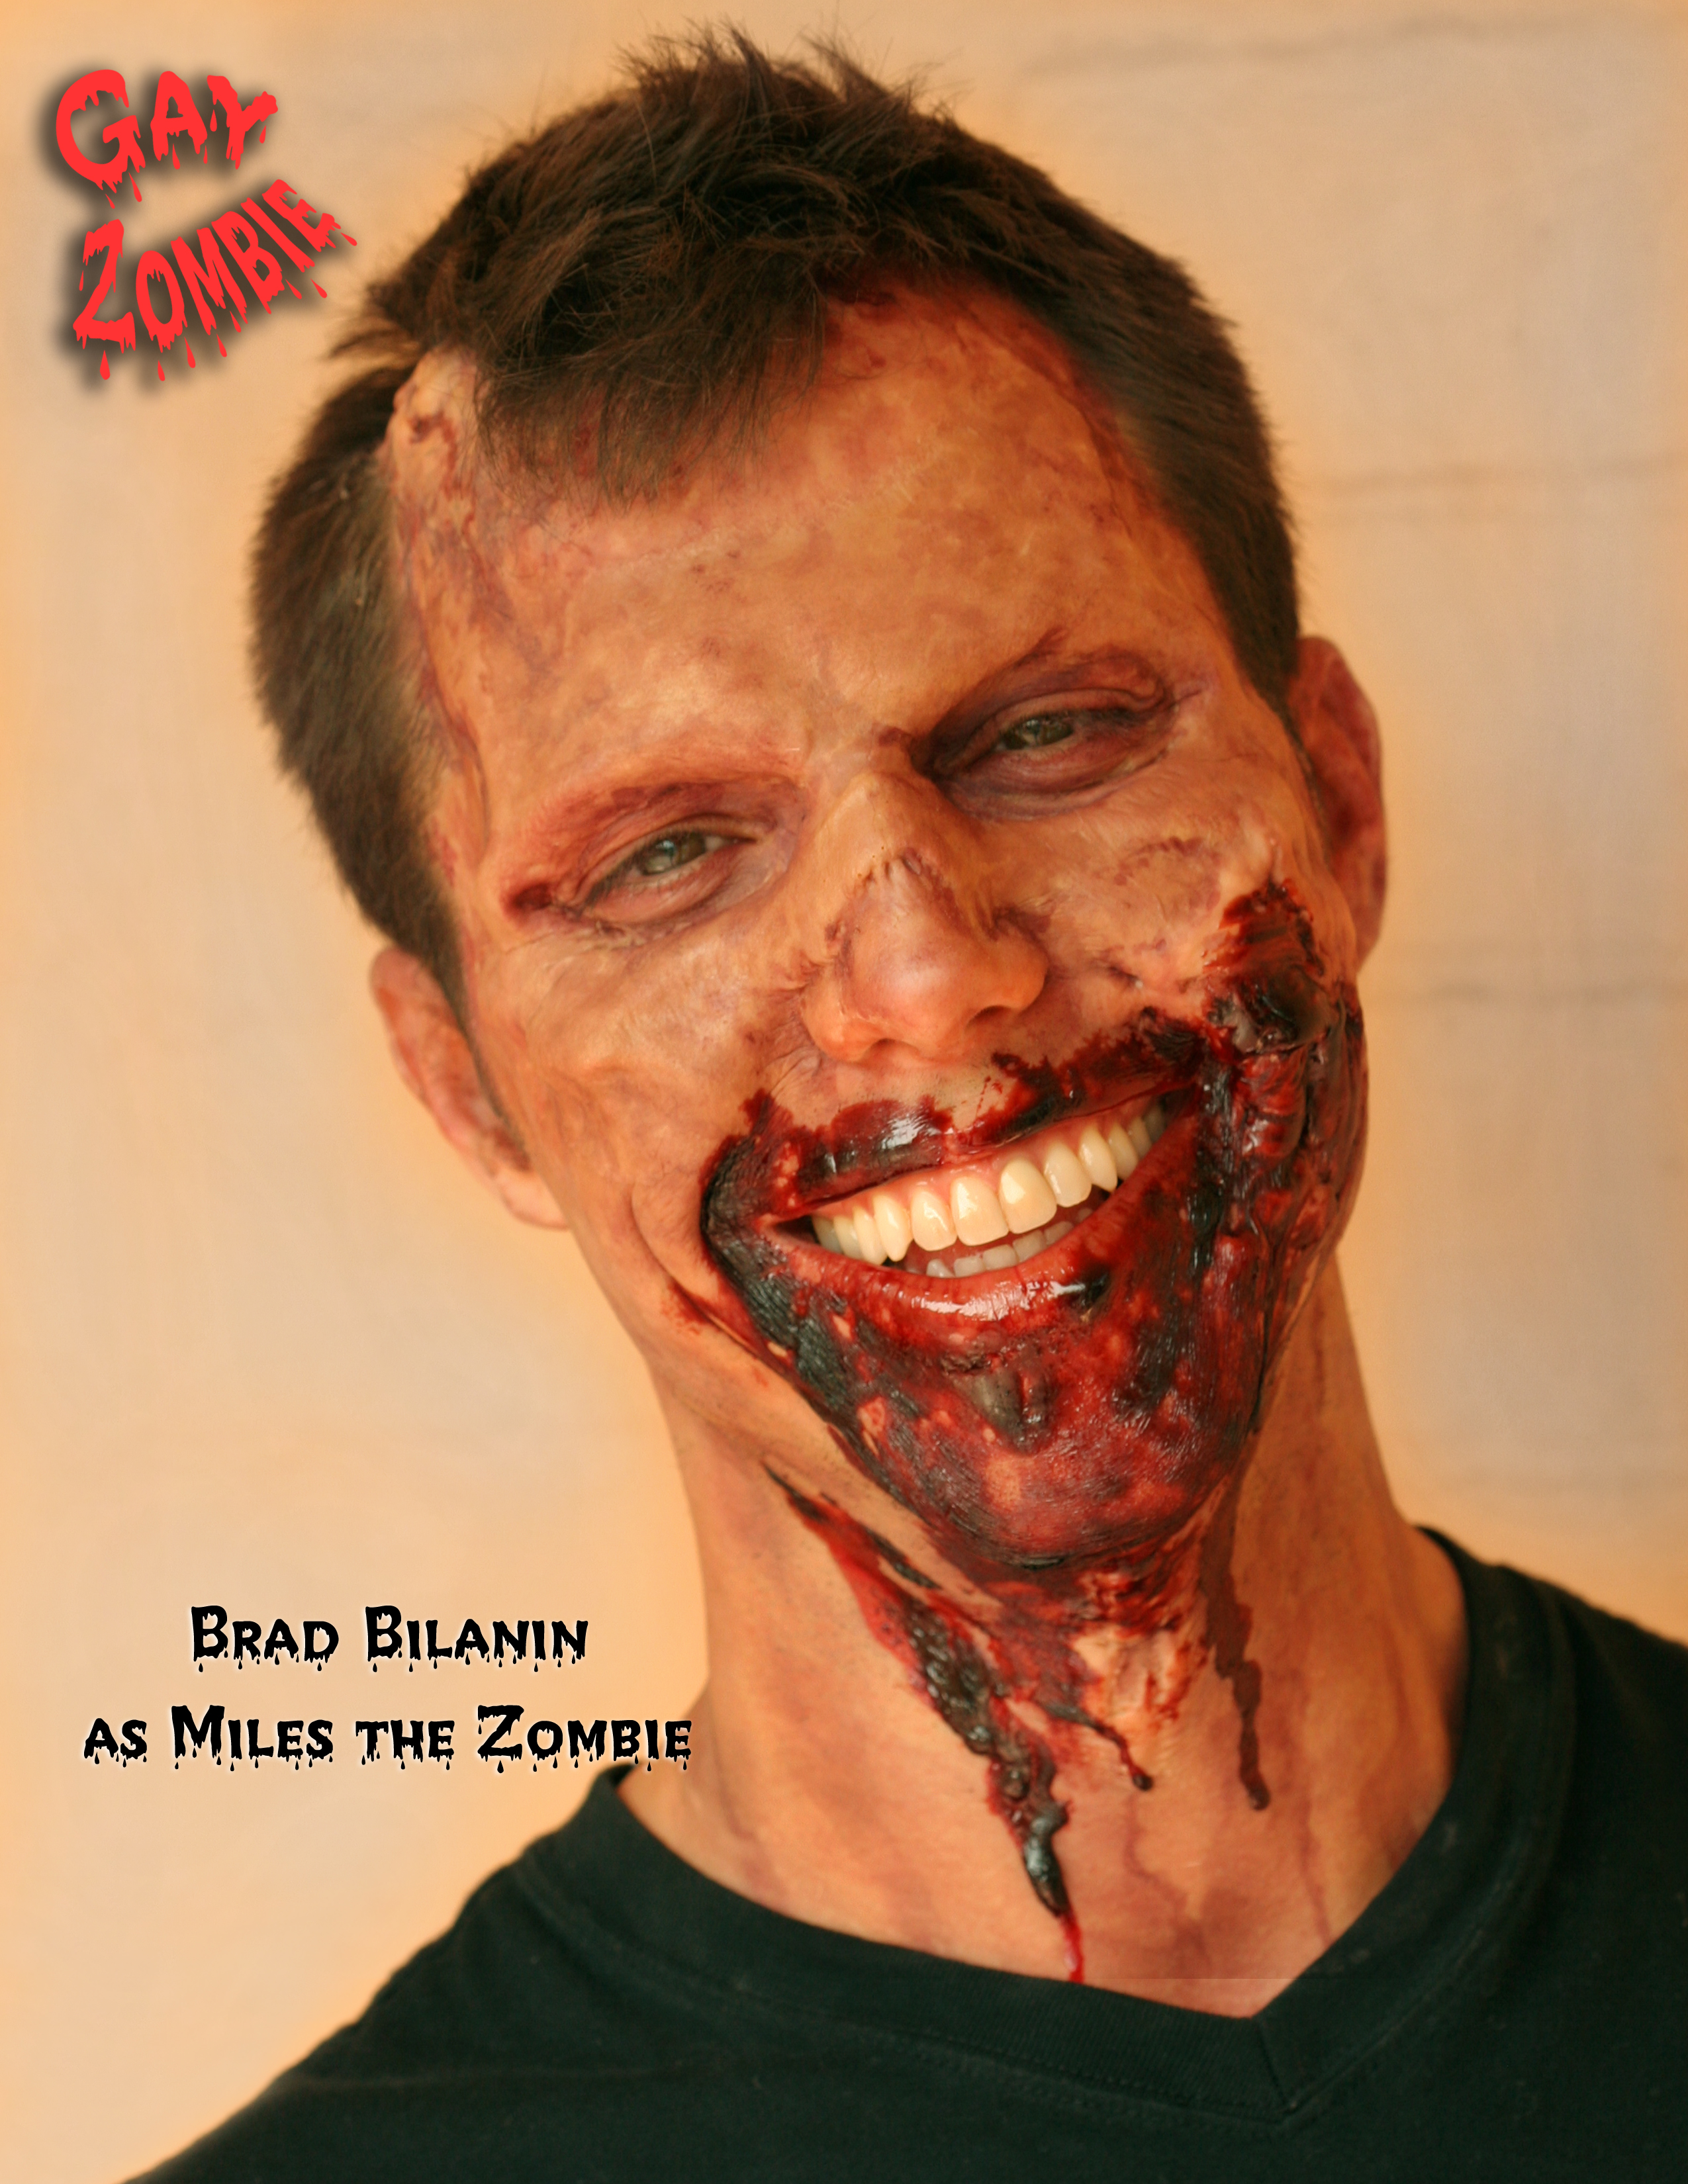 Gay zombie press photo.